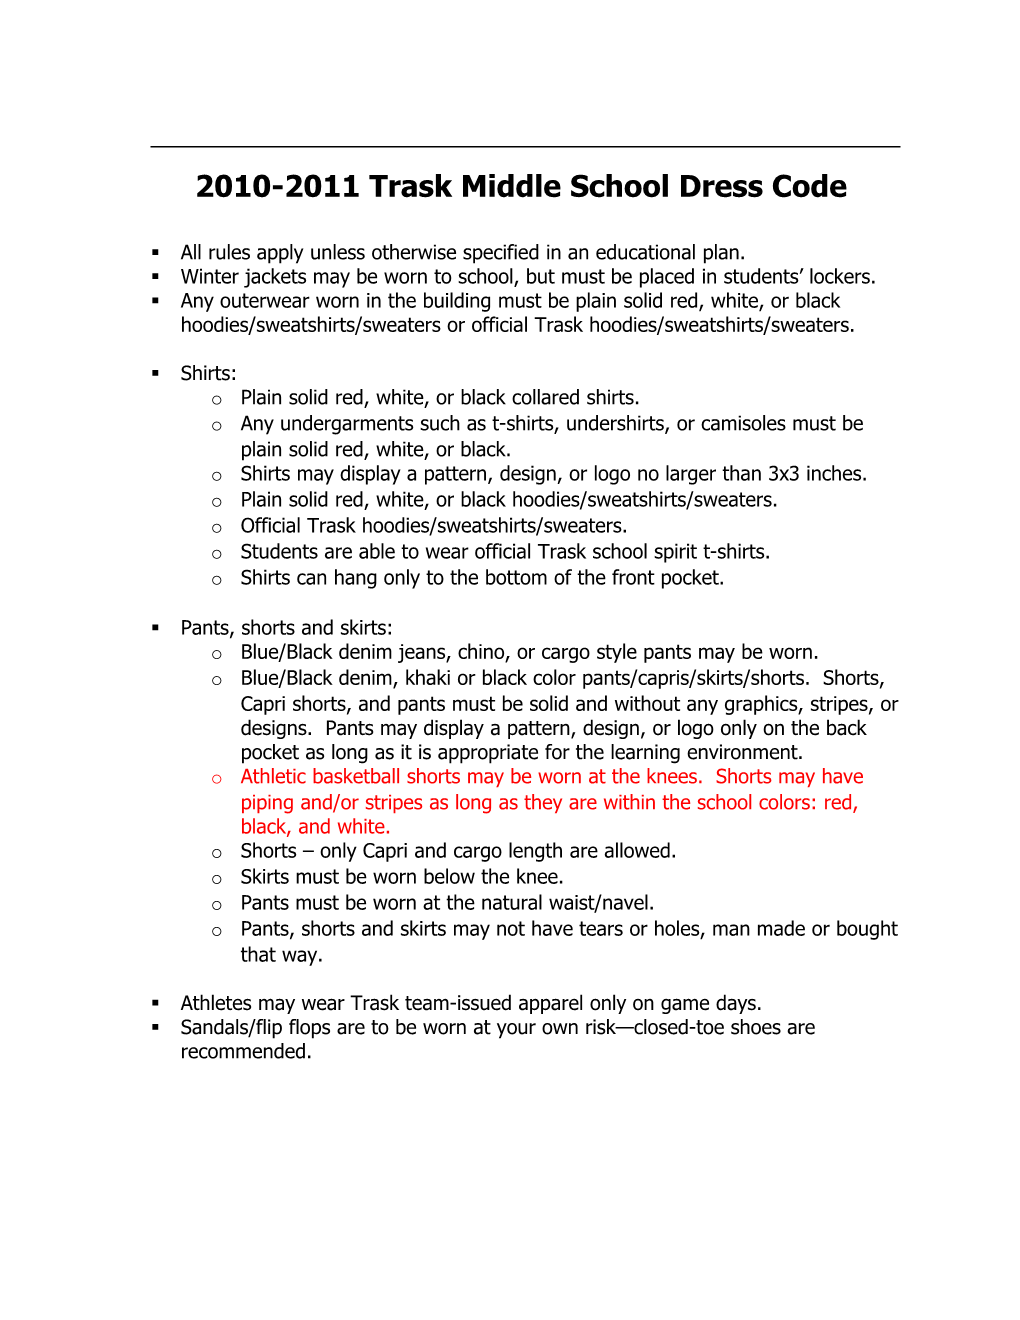 2009-2010 Trask Middle School Dress Code